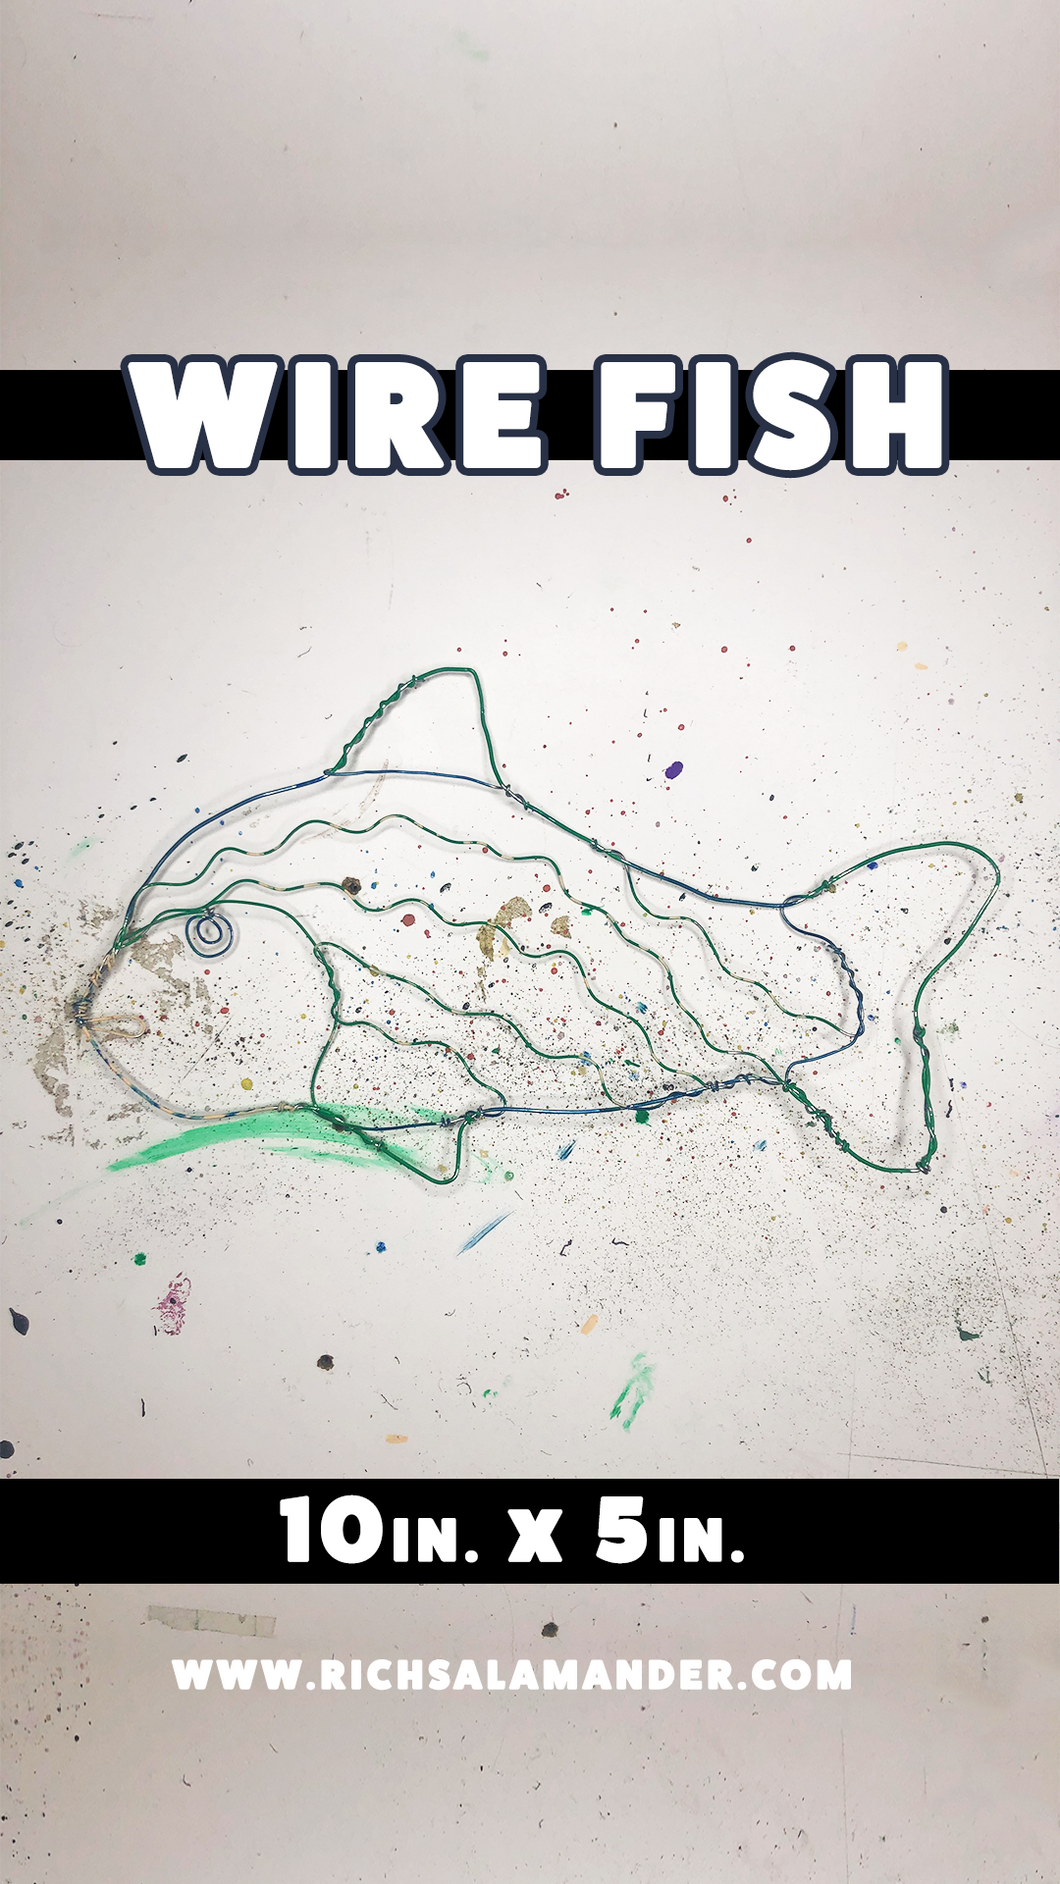 =WIRE FISH=